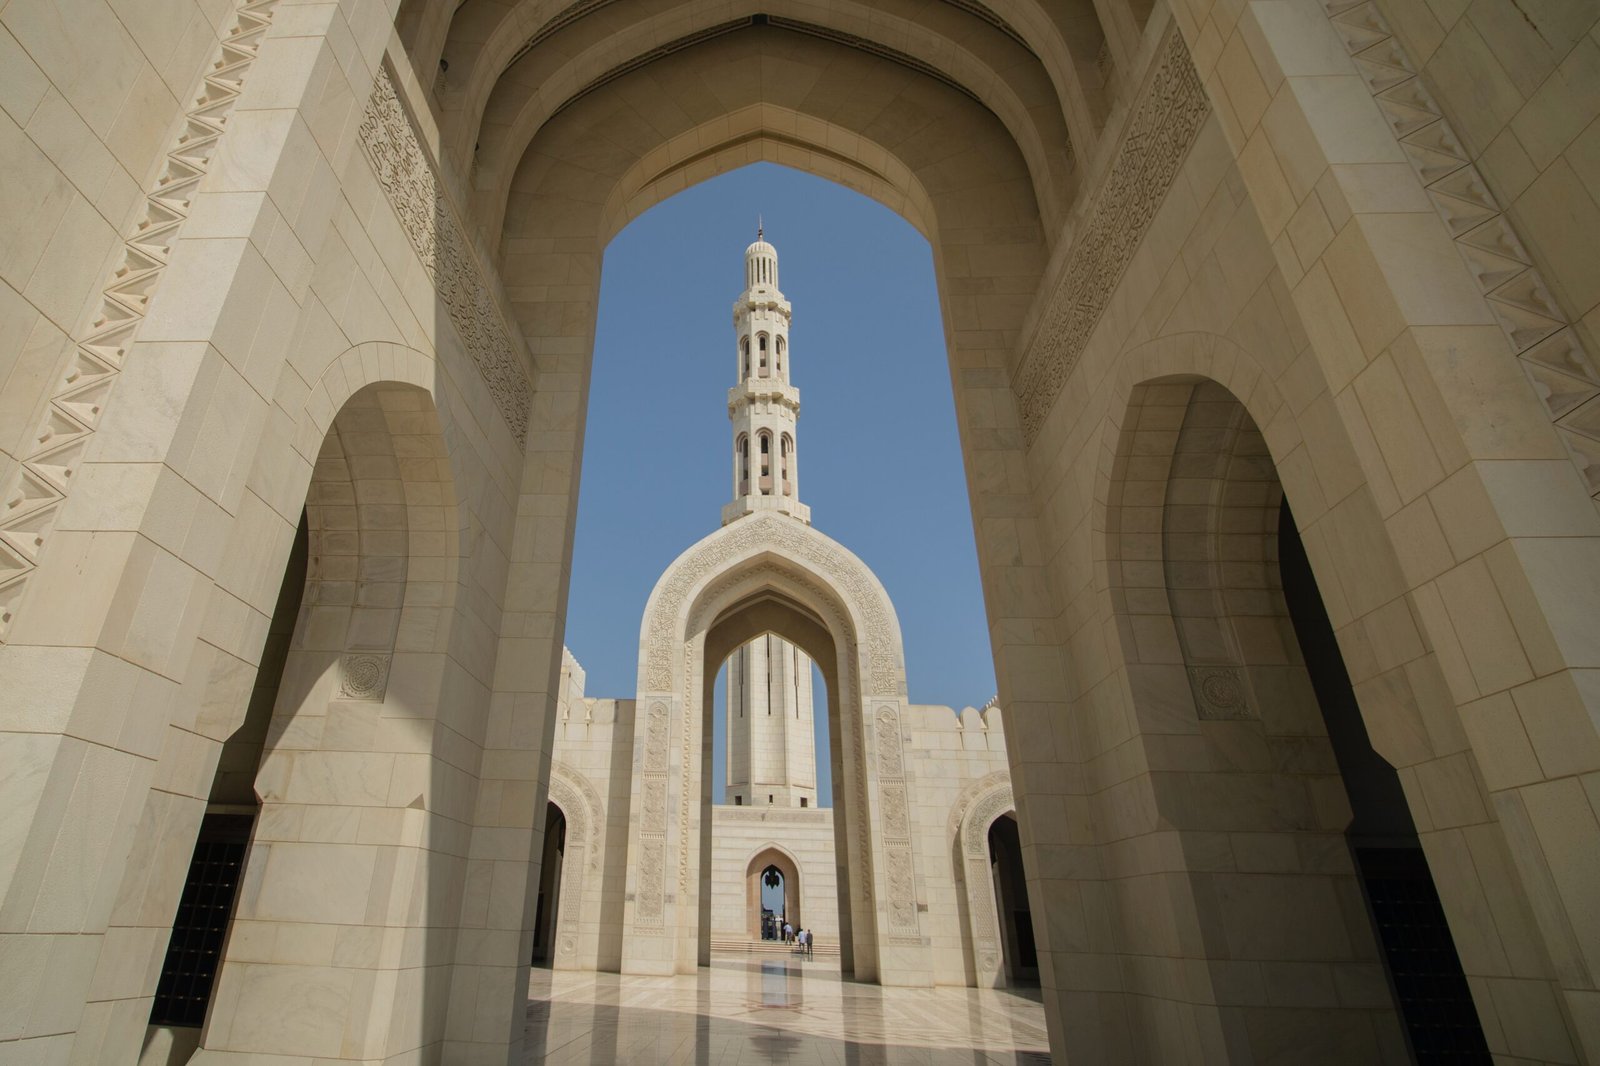 Sultan Qaboos Grand Mosque, Muscat. 416,000 square feet